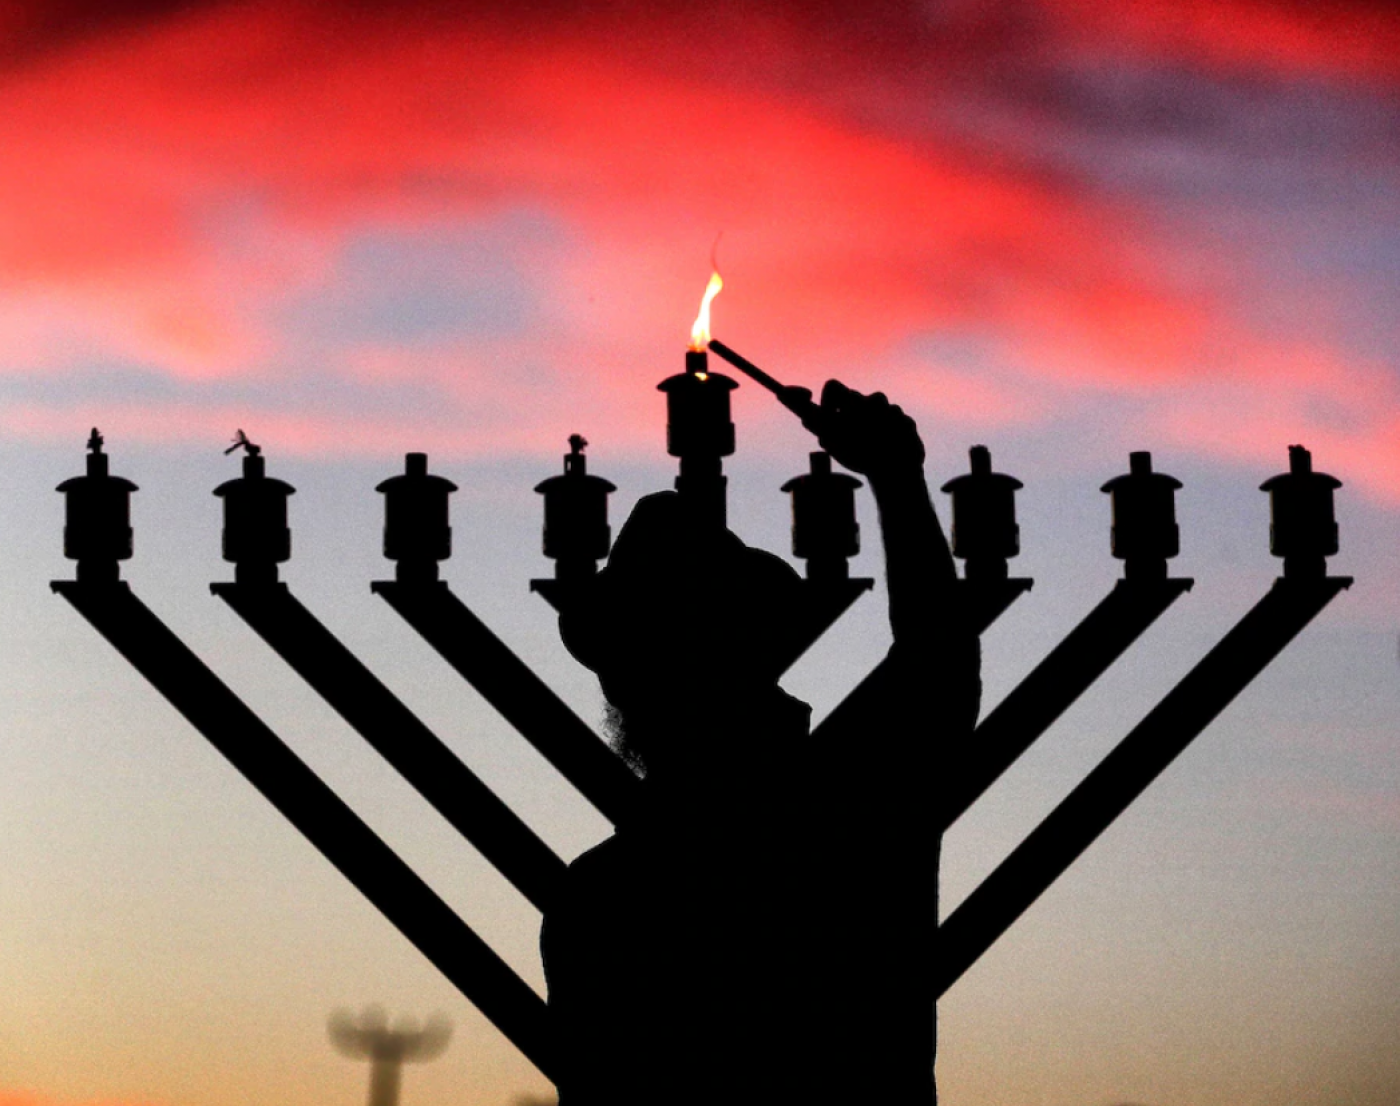 Rabbi Tzviky Dubov lights a menorah in Maitland, Fla., on Thursday. (Joe Burbank/Orlando Sentinel/AP)